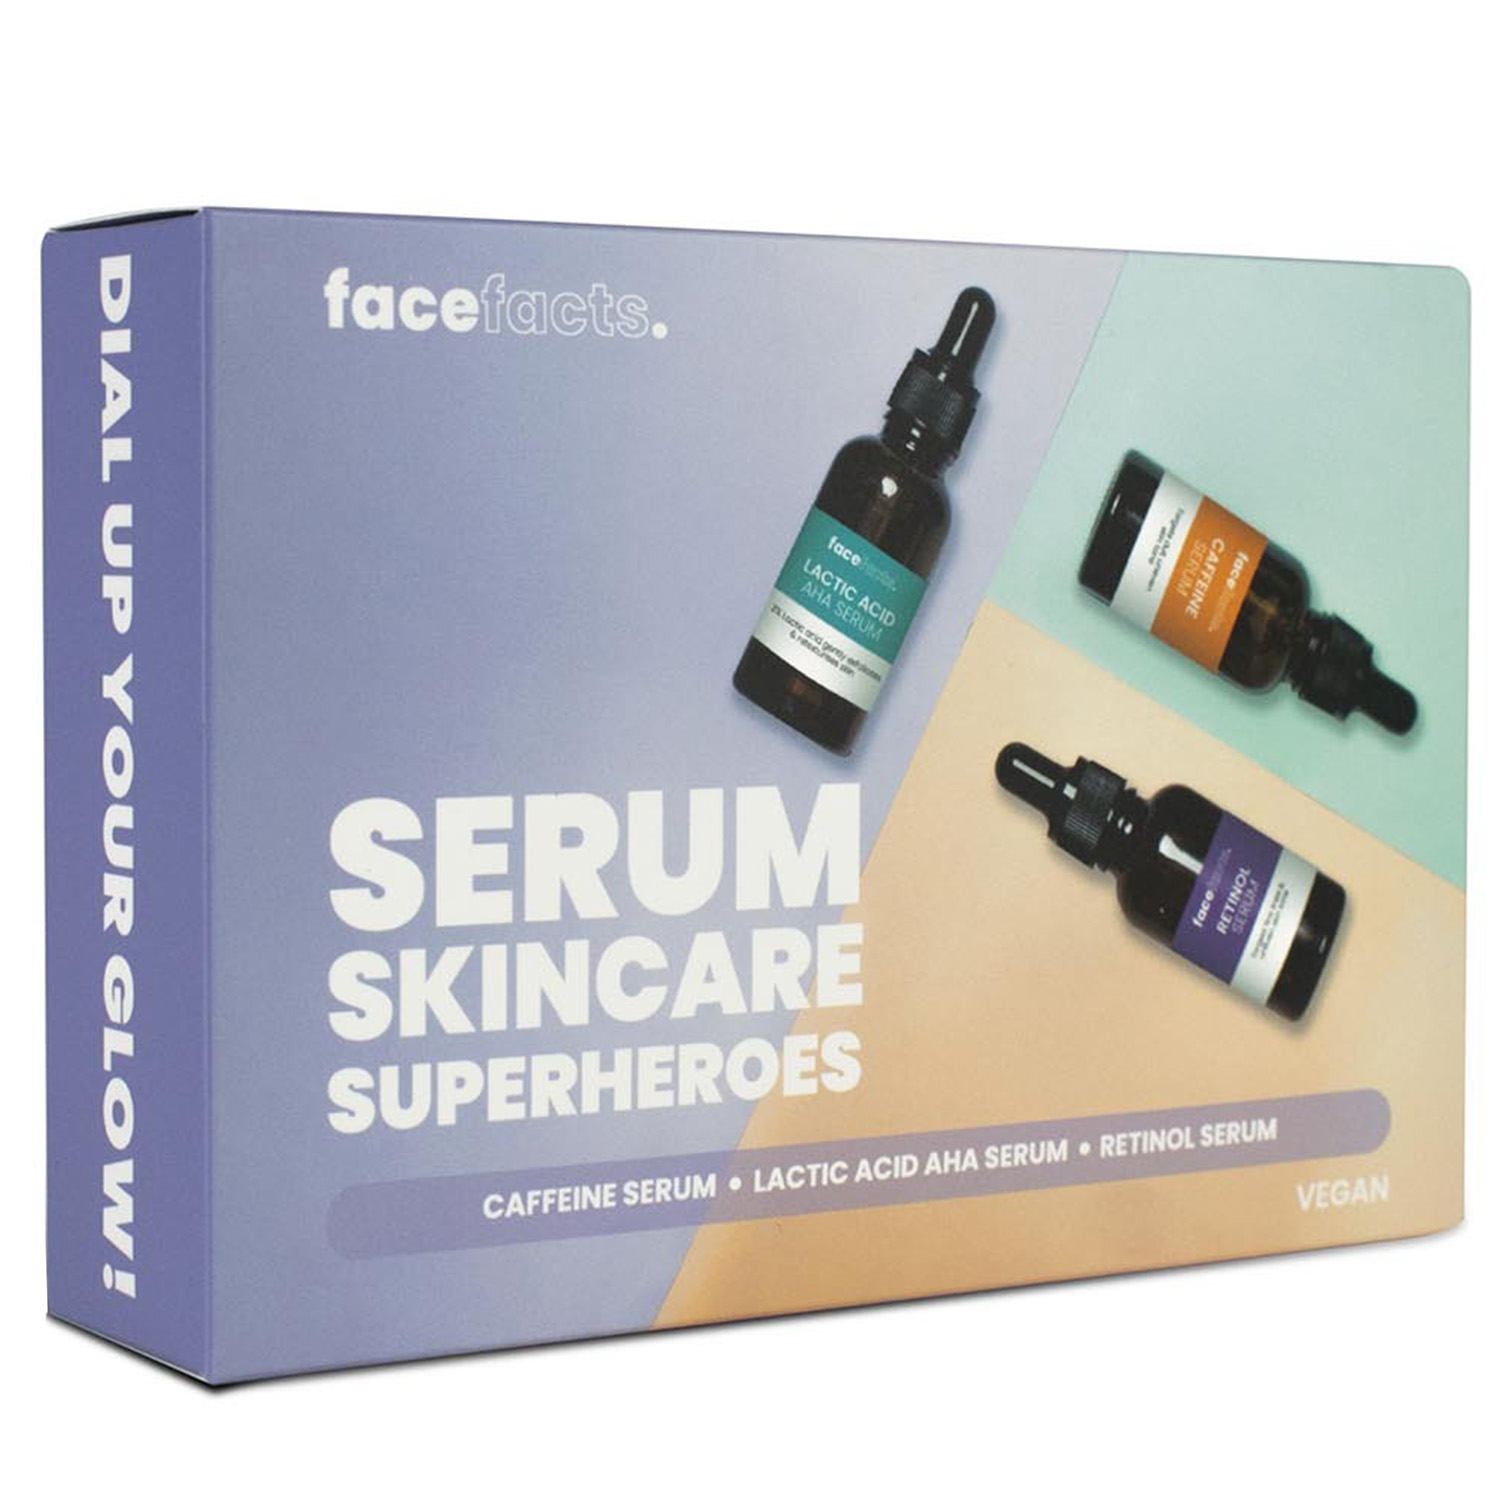 Face Facts Serum Skincare Superheroes Skincare Set Image 1